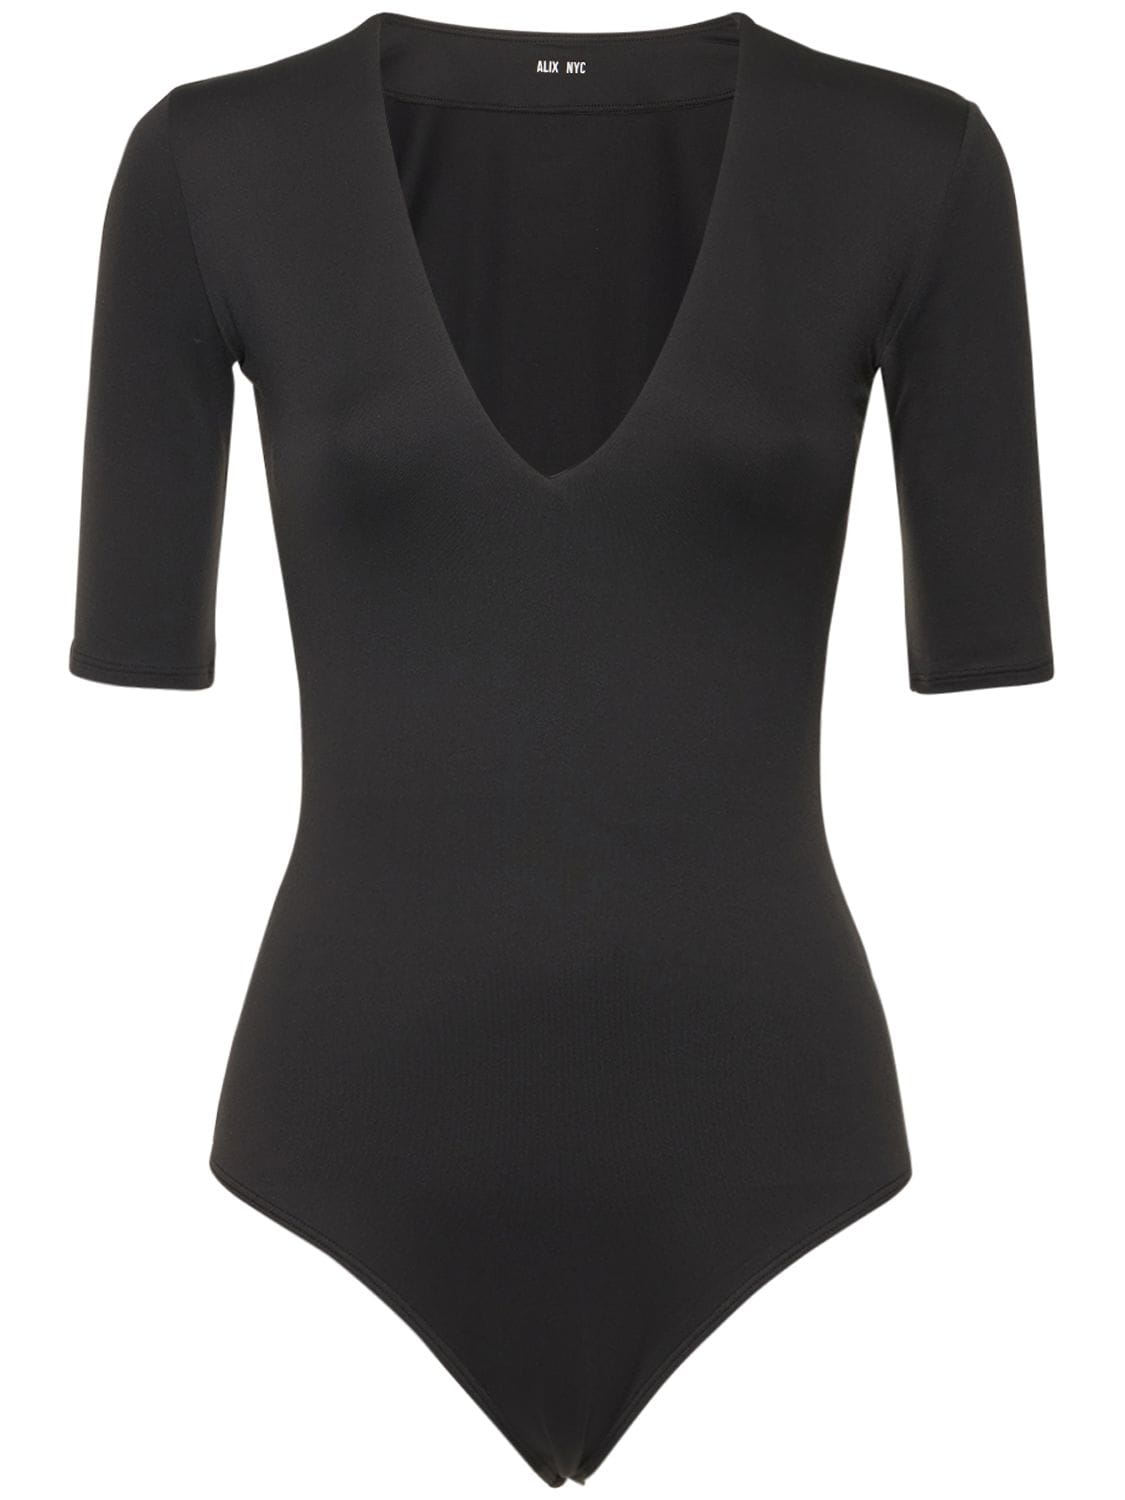 ALIX NYC Ludlow  Short-sleeve Jersey Bodysuit